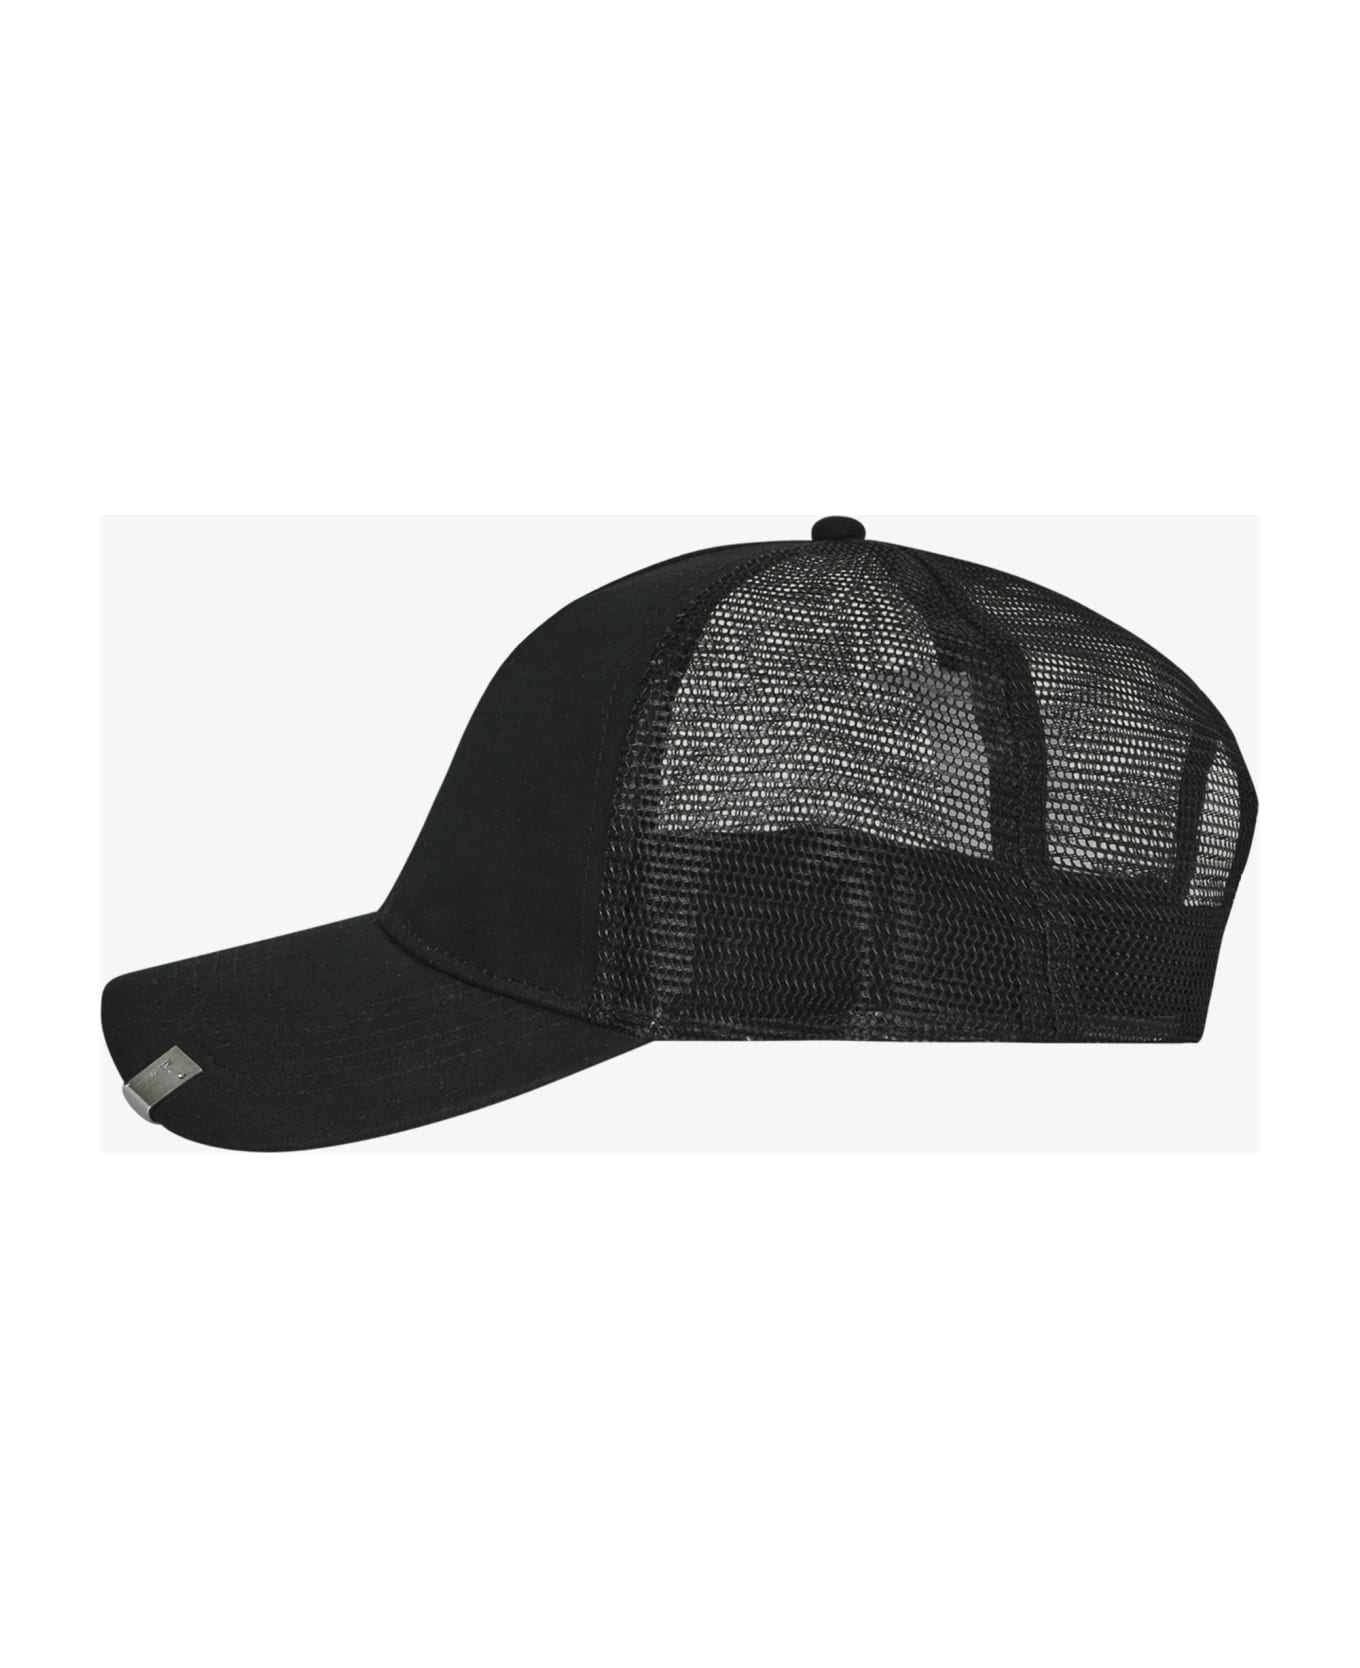 1017 ALYX 9SM Lightercap Trucker Cap Black baseball cap with mesh at back - Lightercap Trucker Cap - Nero 帽子